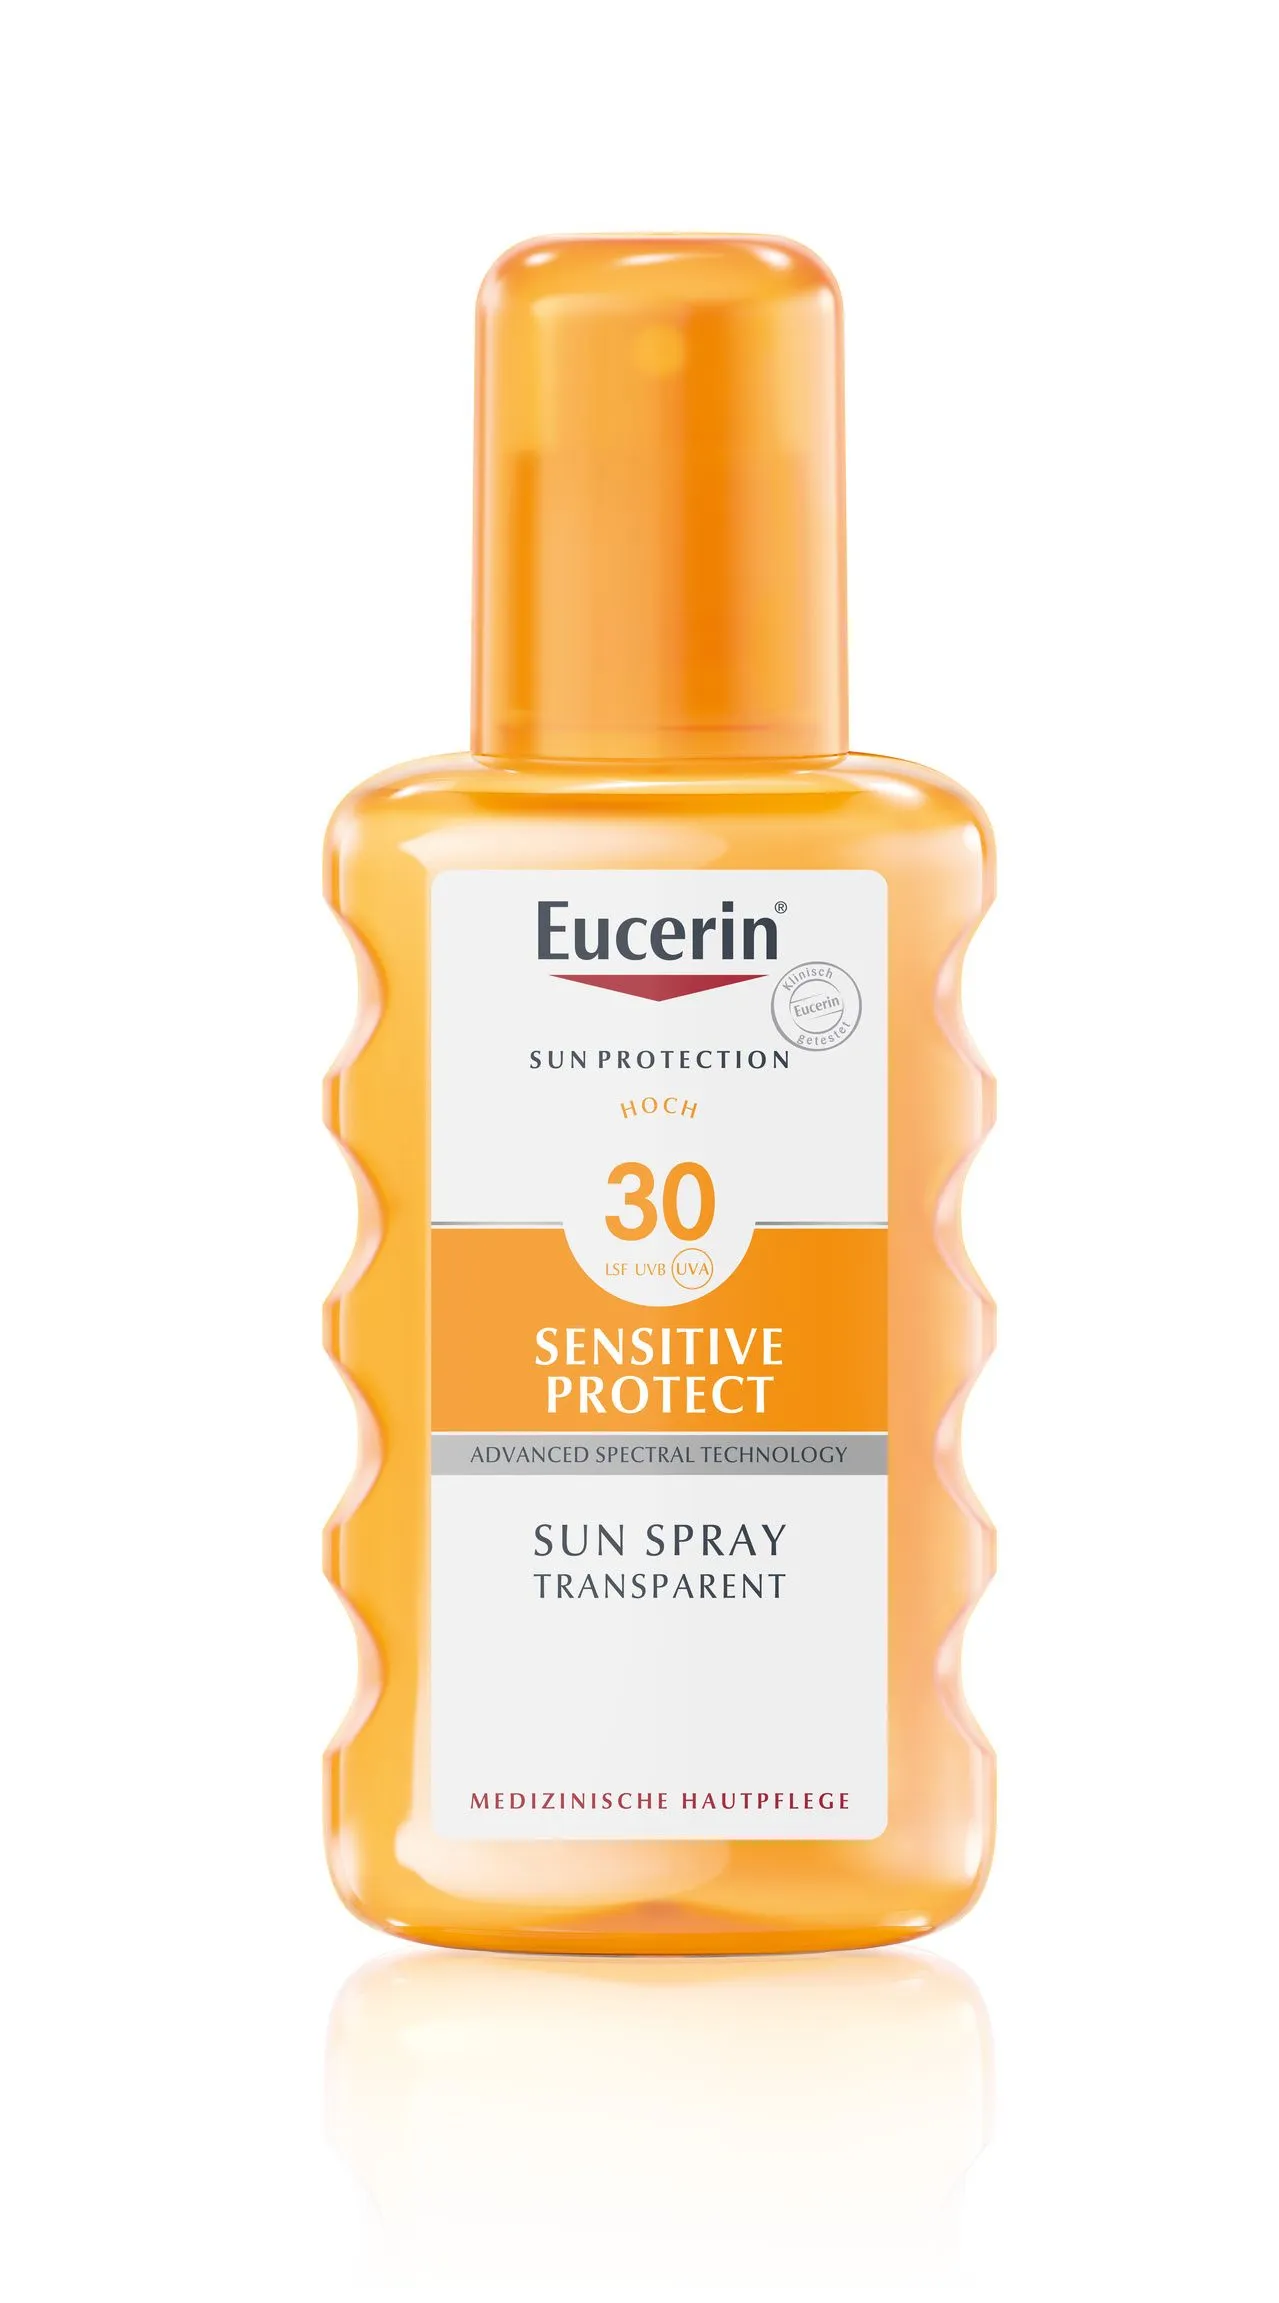 Eucerin SUN Dry Touch Oil Control SPF30 transparentní sprej 200 ml